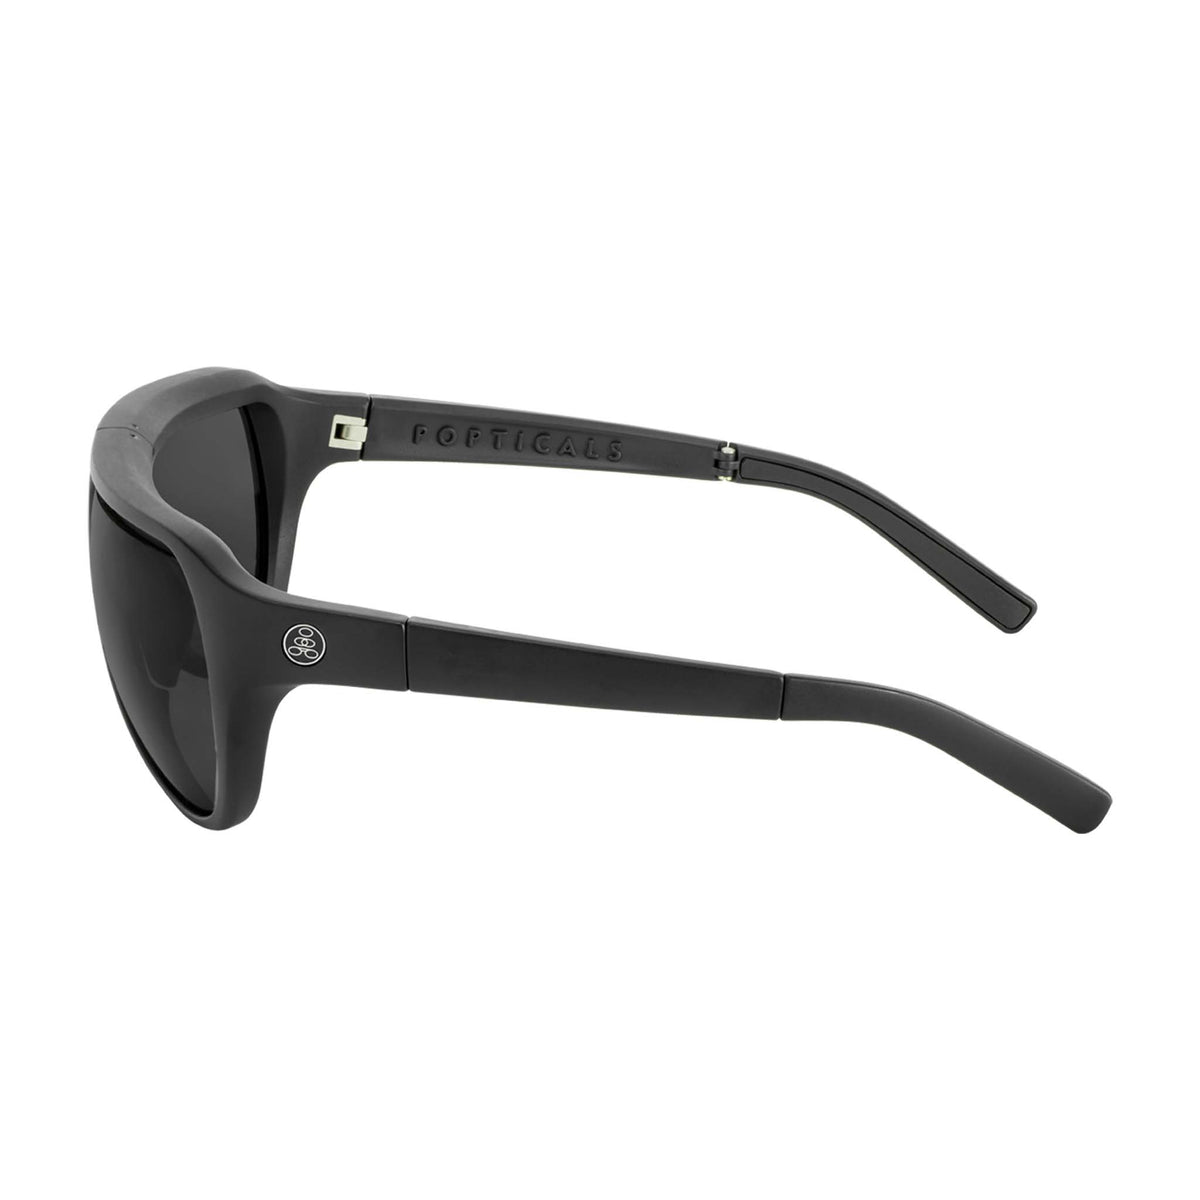 Popticals, Premium Compact Sunglasses, PopAir, 300010-BMGS, Standard Sunglasses, Matte Black Frame, Gray Lenses, Side View